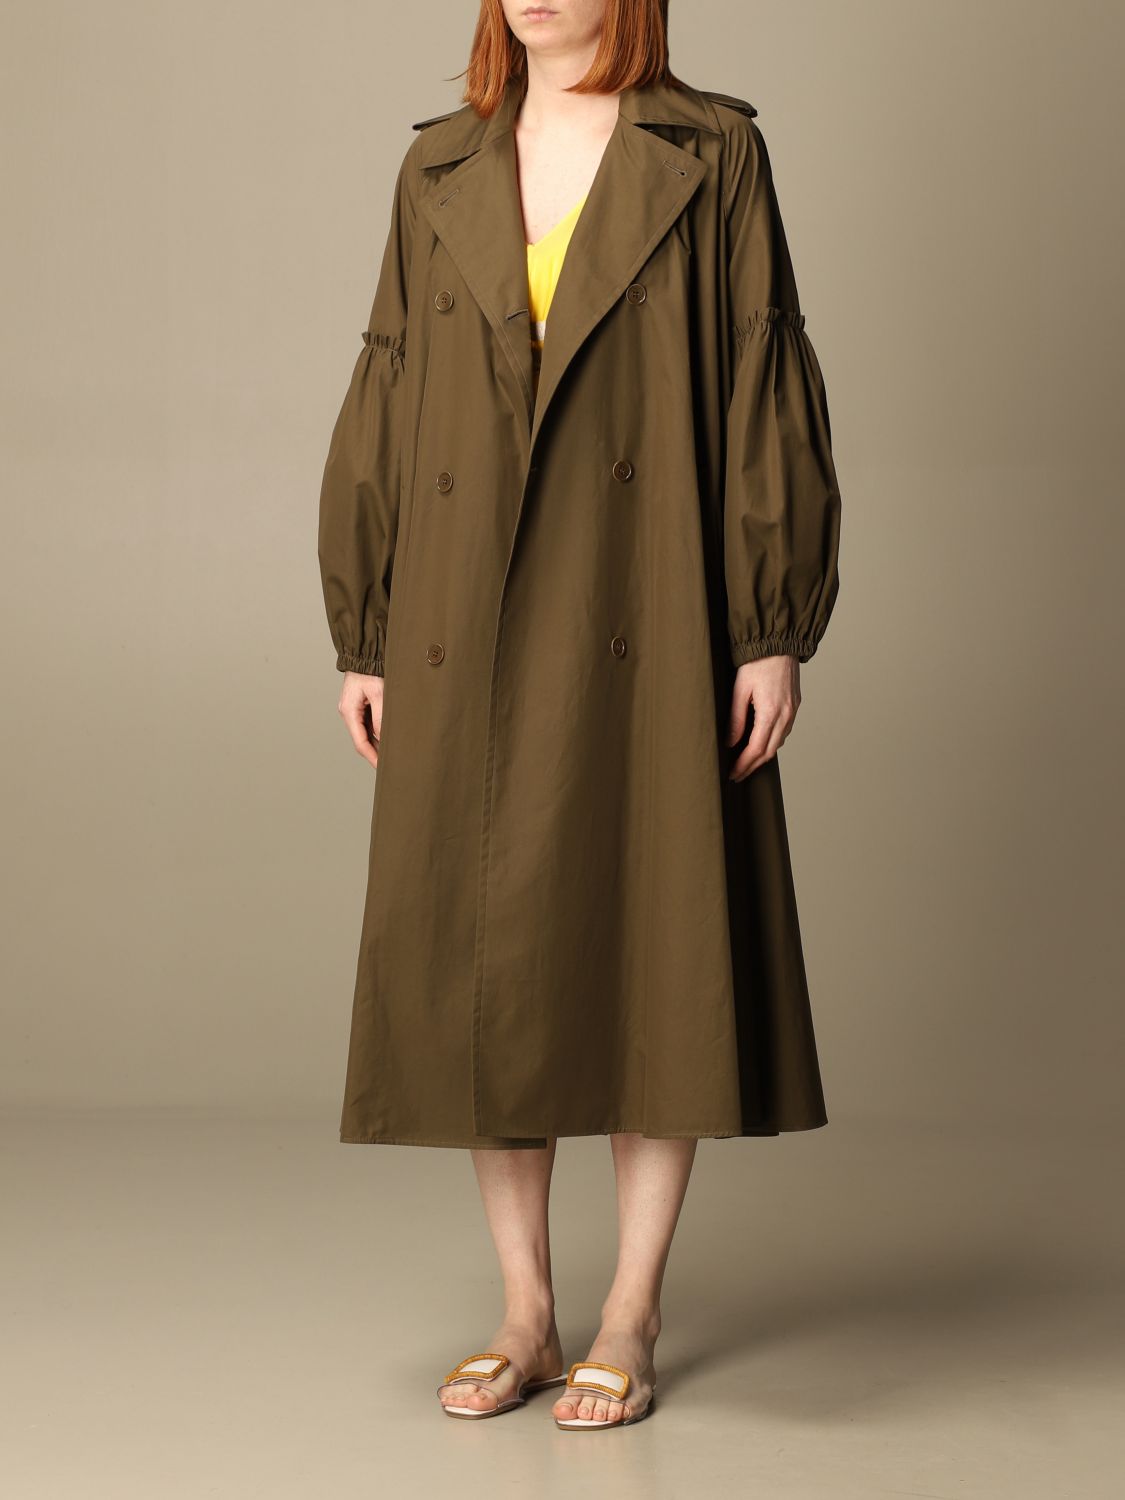 MAX MARA: Empoli trench coat in cotton poplin - Green | Max Mara trench ...